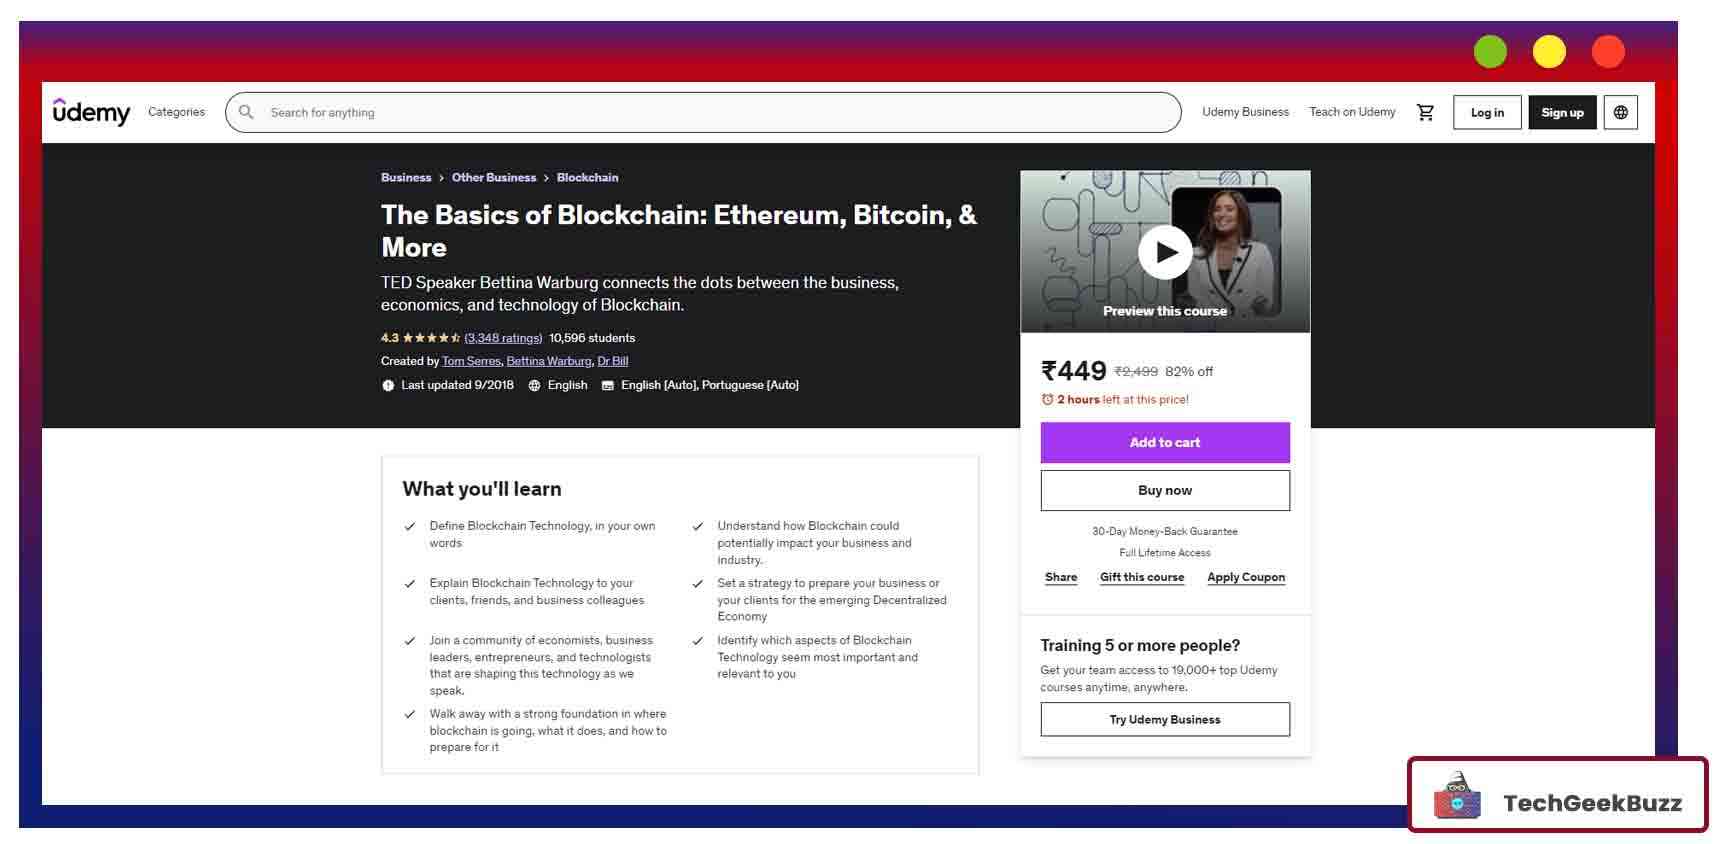 The Basics of Blockchain: Ethereum, Bitcoin, & More